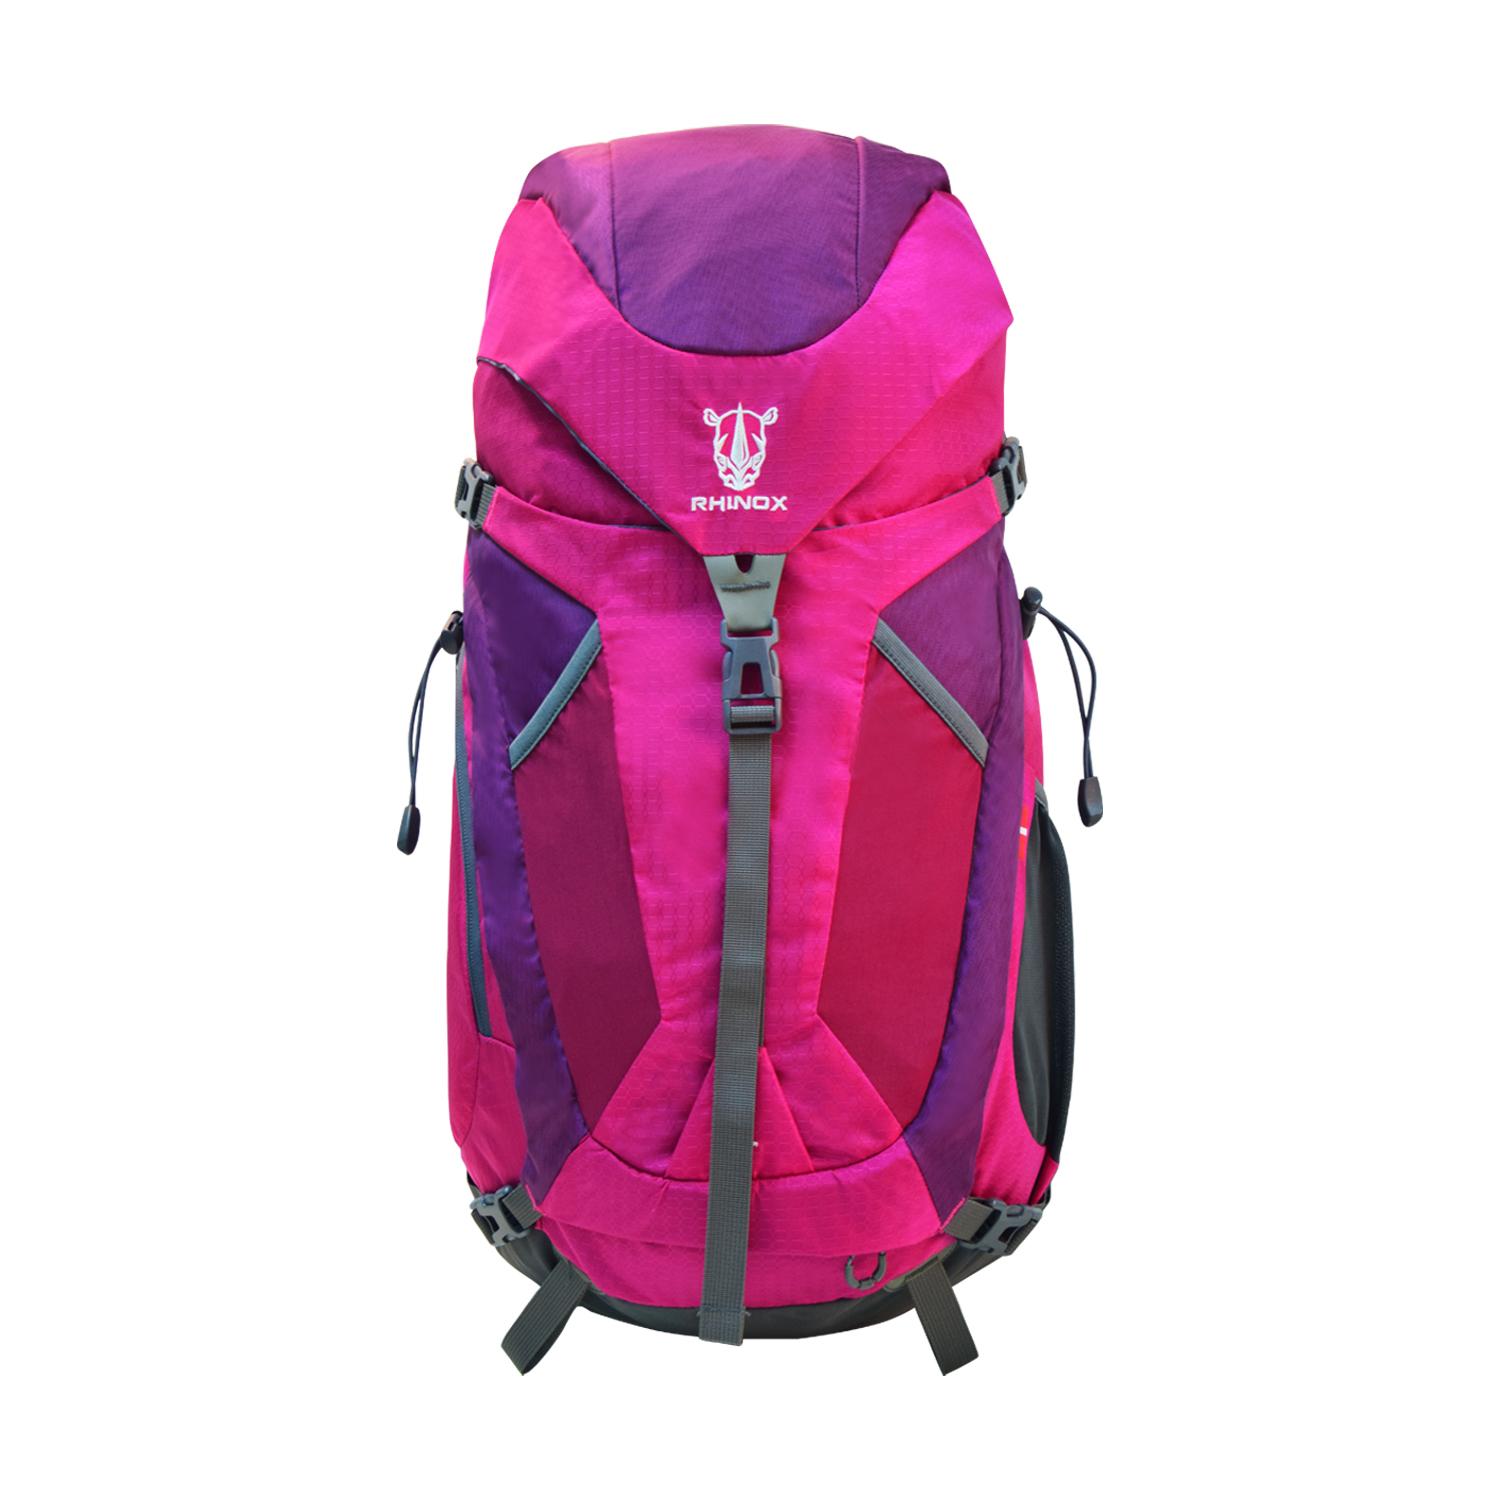 olx hiking bag